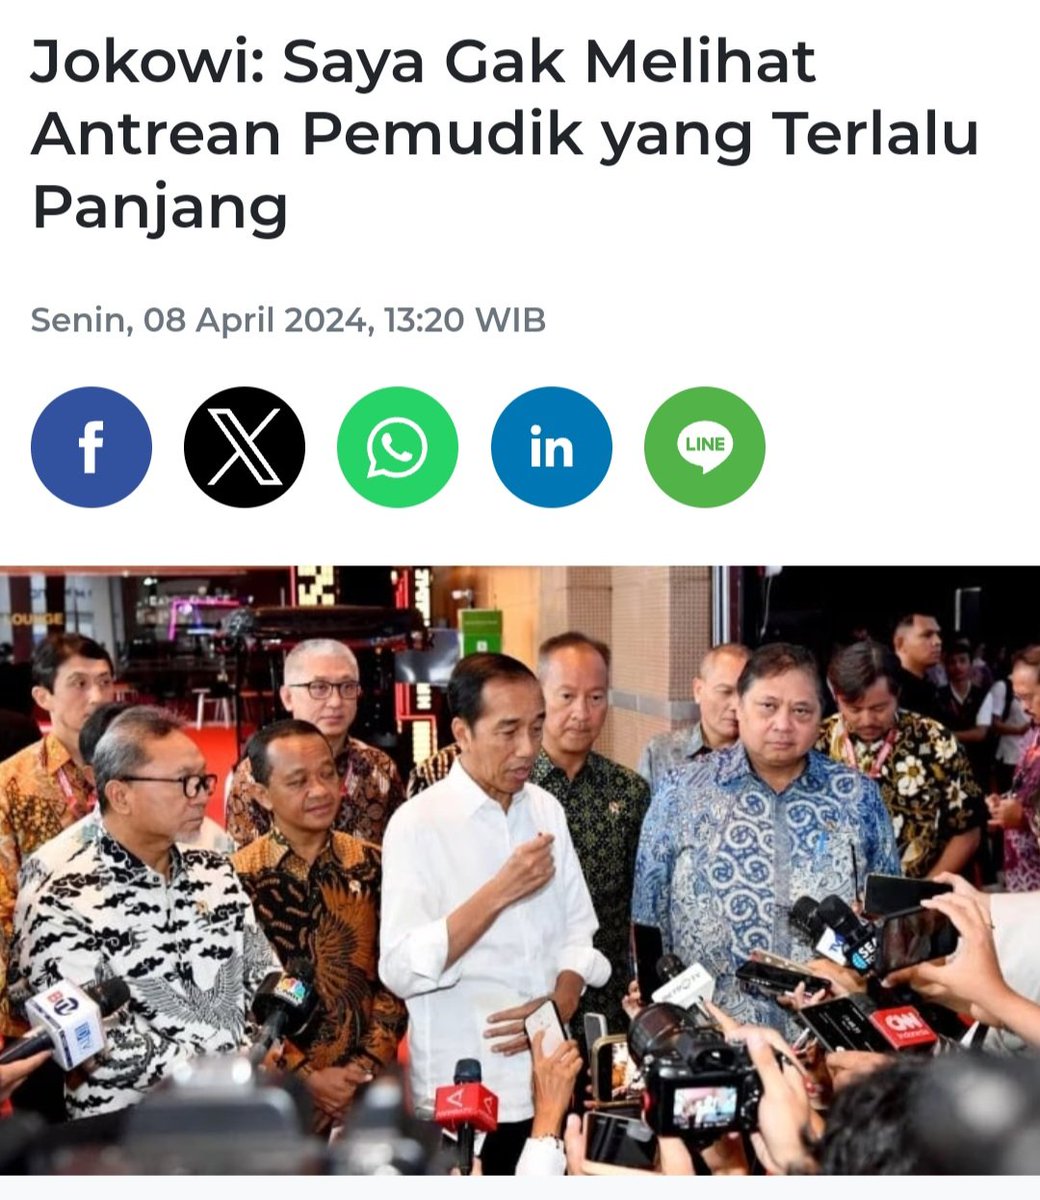 Sepertinya Jokowi di NINABOBOKAN oleh menteri2nya, laporan ASAL BAPAK SENANG Jangan2 Jokowi ga tau antrian panjang pemudik dipelabuhan Merak yang sampai lebih dari 12 jam? Miris dengan pernyataan seperti ini, terlalu MENGECILKAN pemudik yang kelelahan bahkan sampai buka…